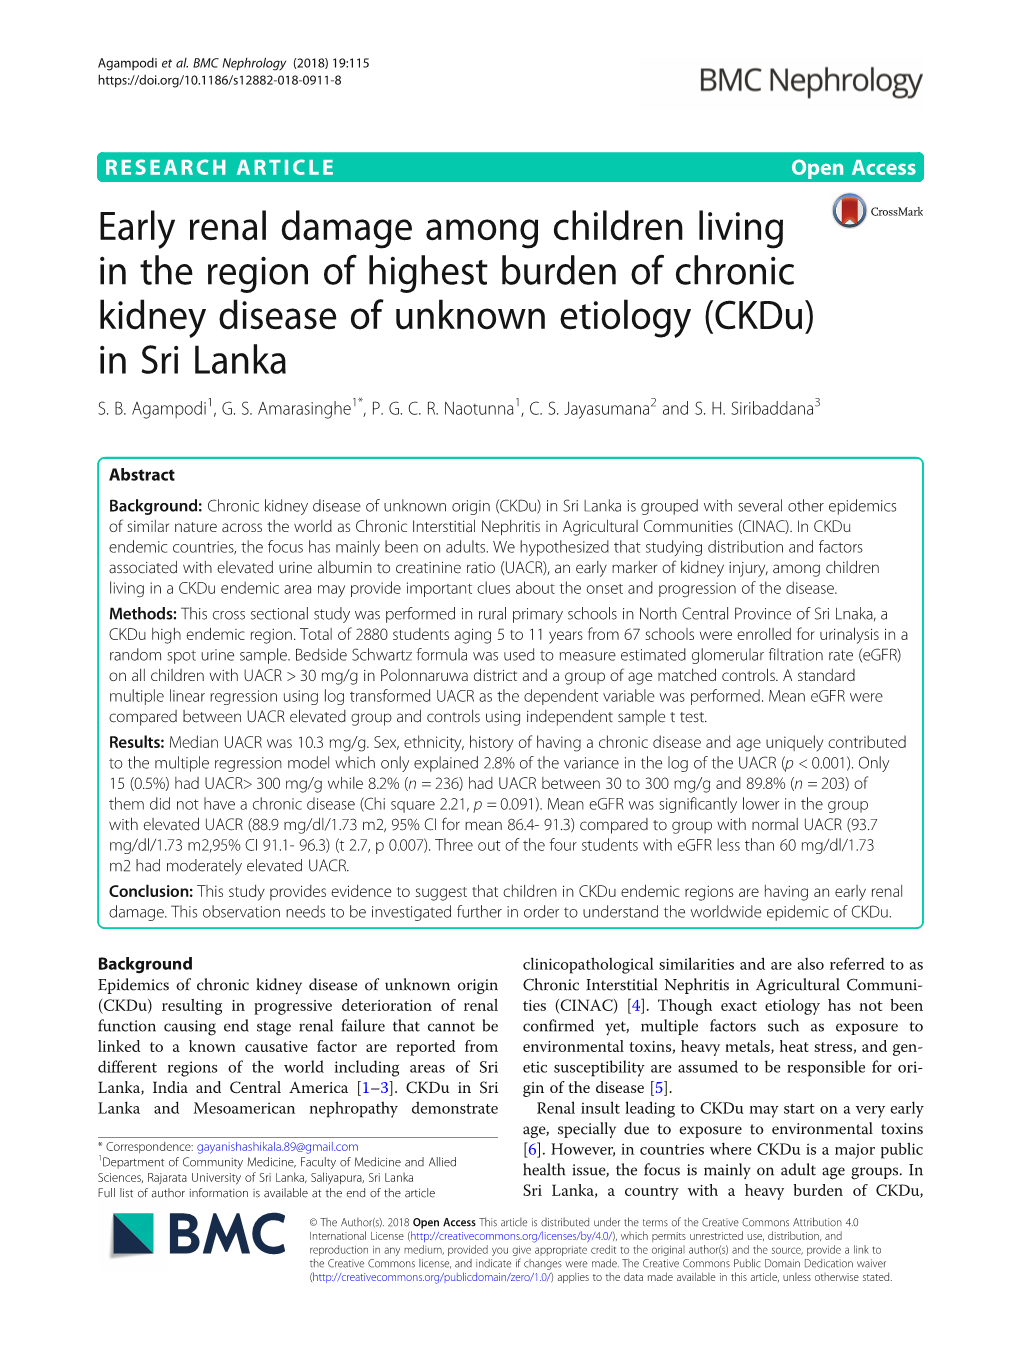 Early Renal Damage Among Children Living in the Region of Highest Burden of Chronic Kidney Disease of Unknown Etiology (Ckdu) in Sri Lanka S